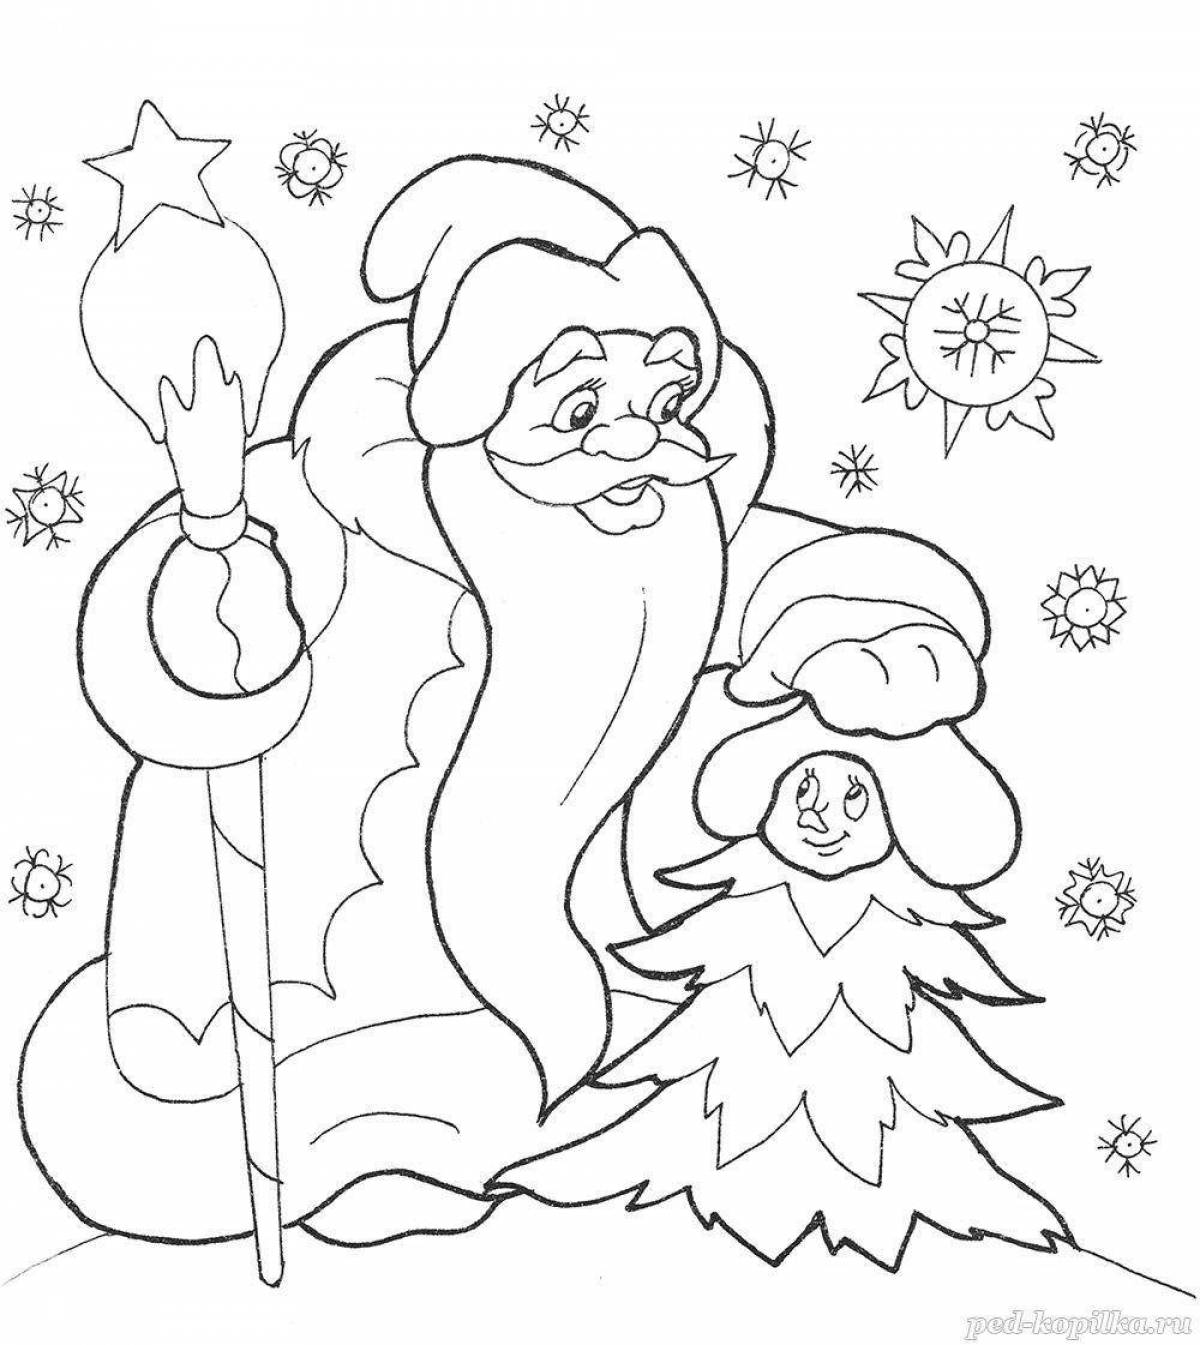 Colorful santa claus coloring page